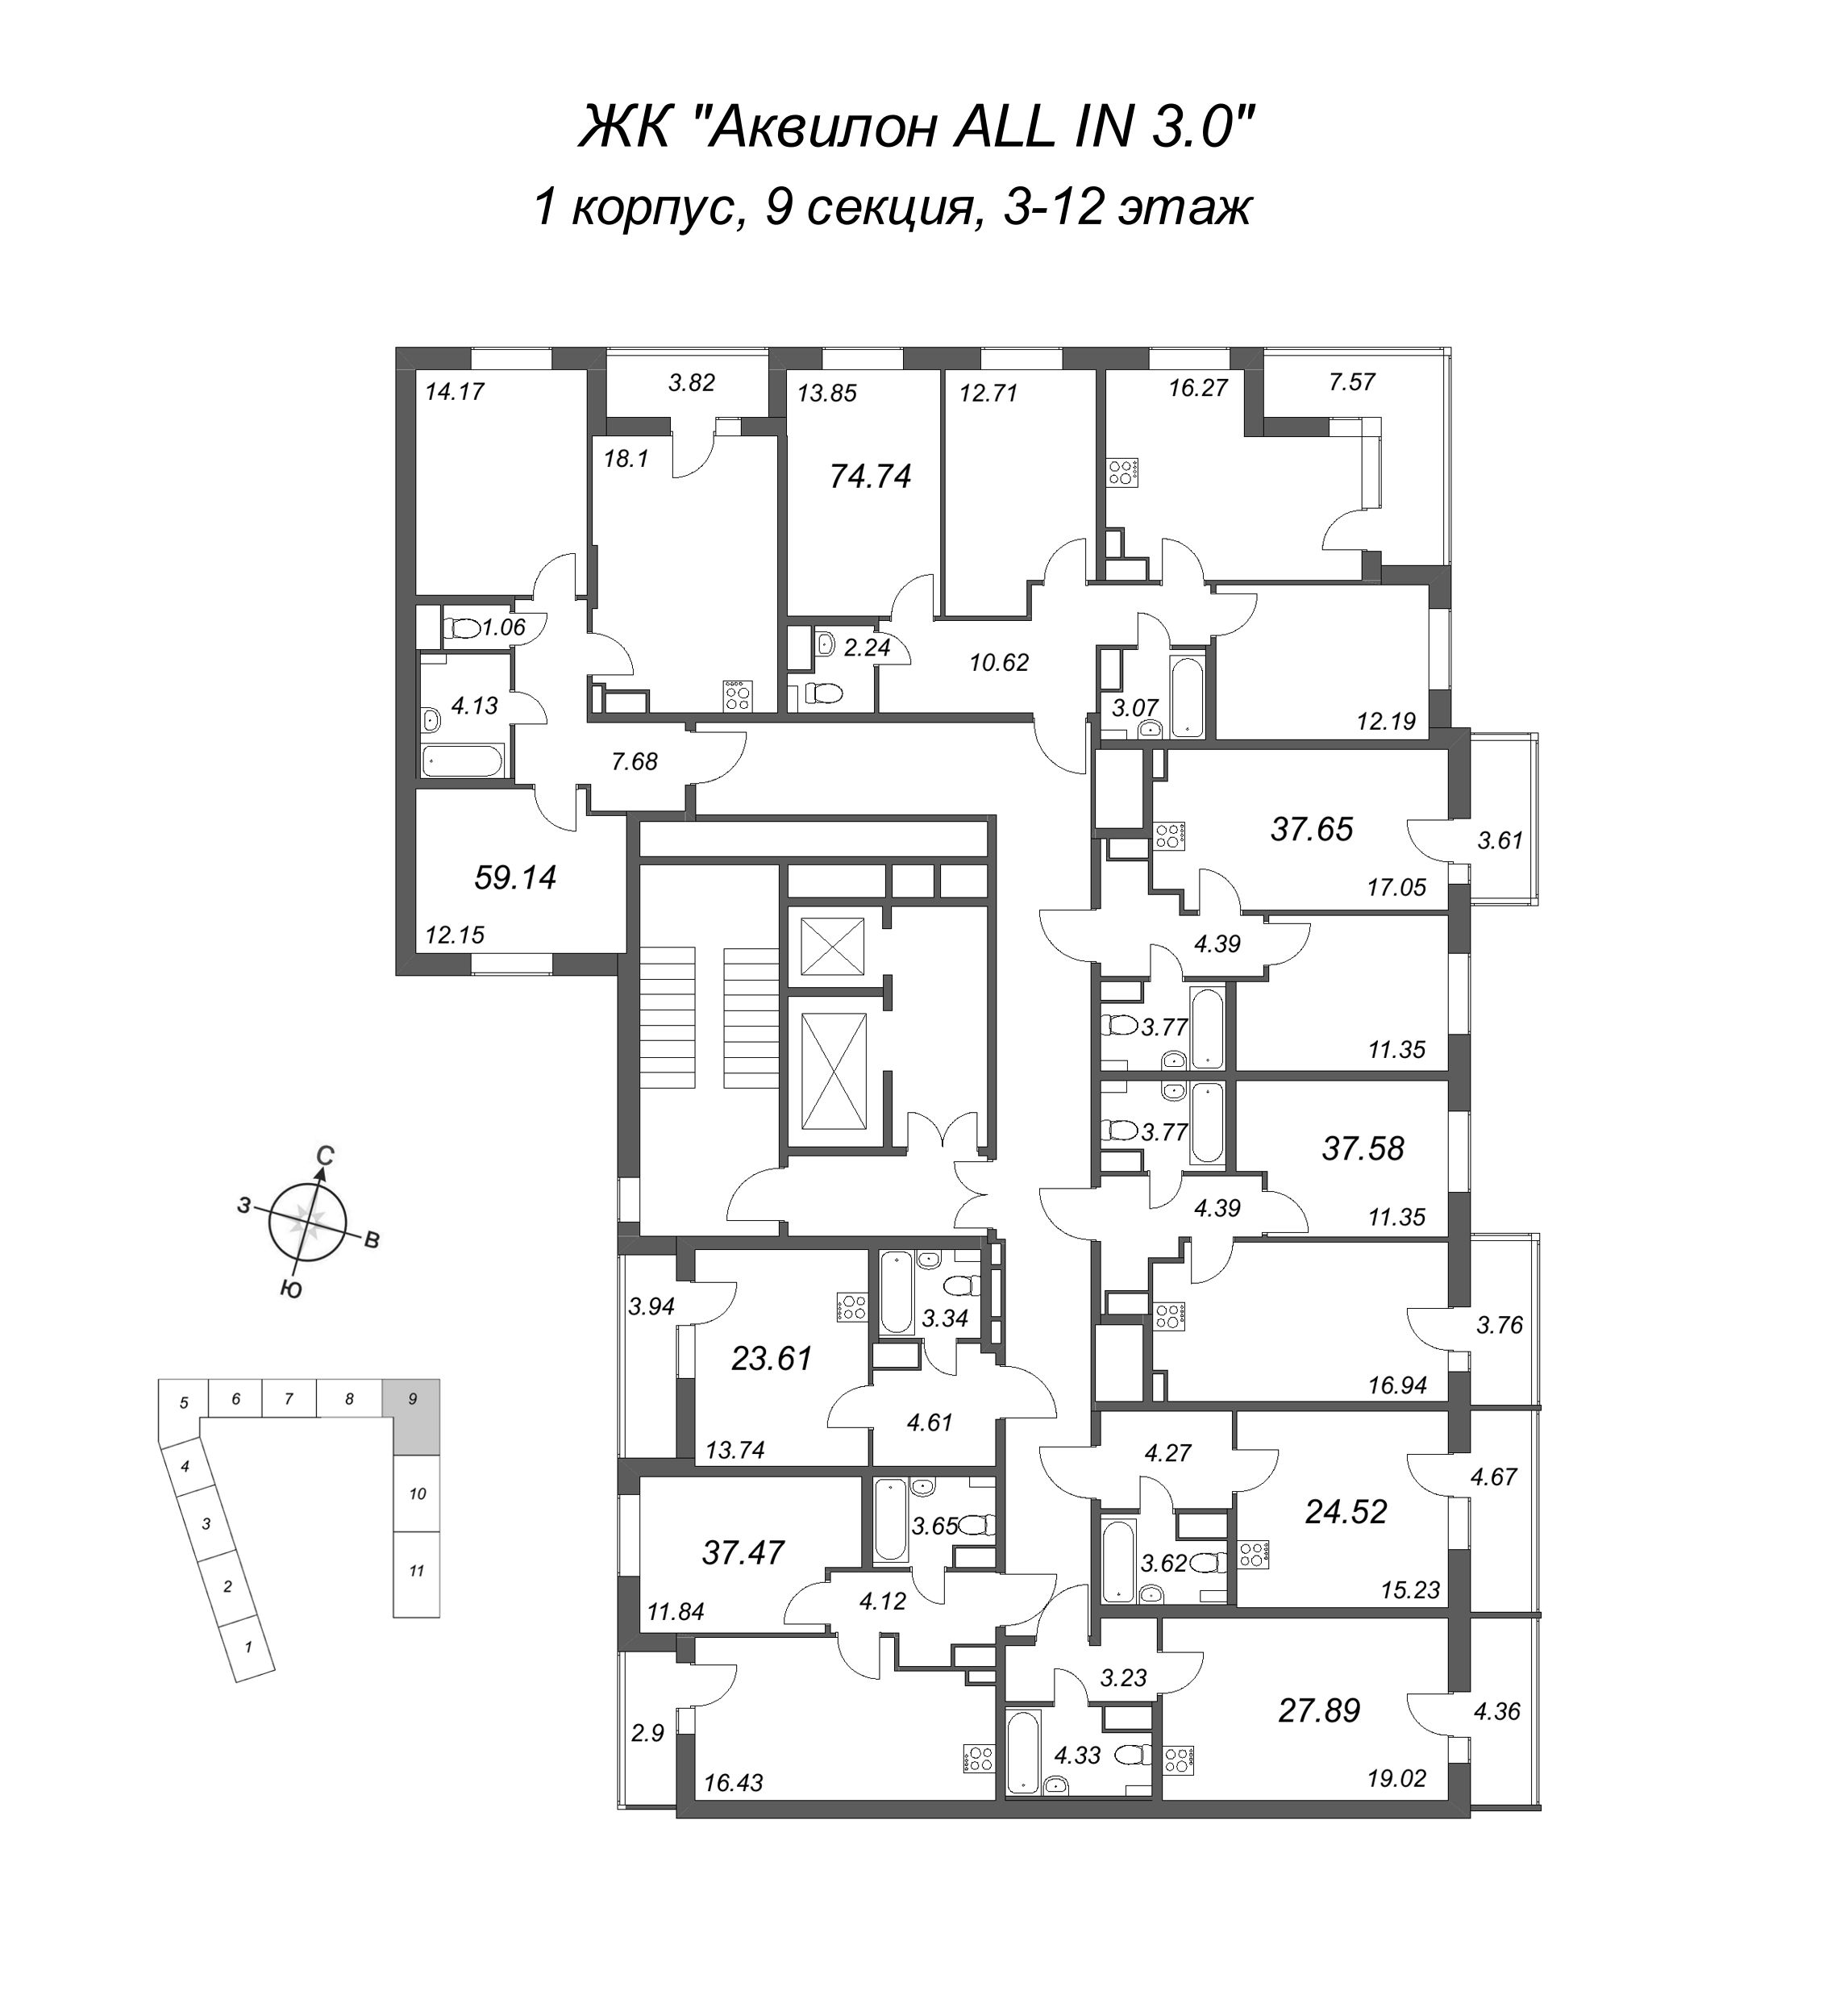 3-комнатная (Евро) квартира, 59.14 м² - планировка этажа